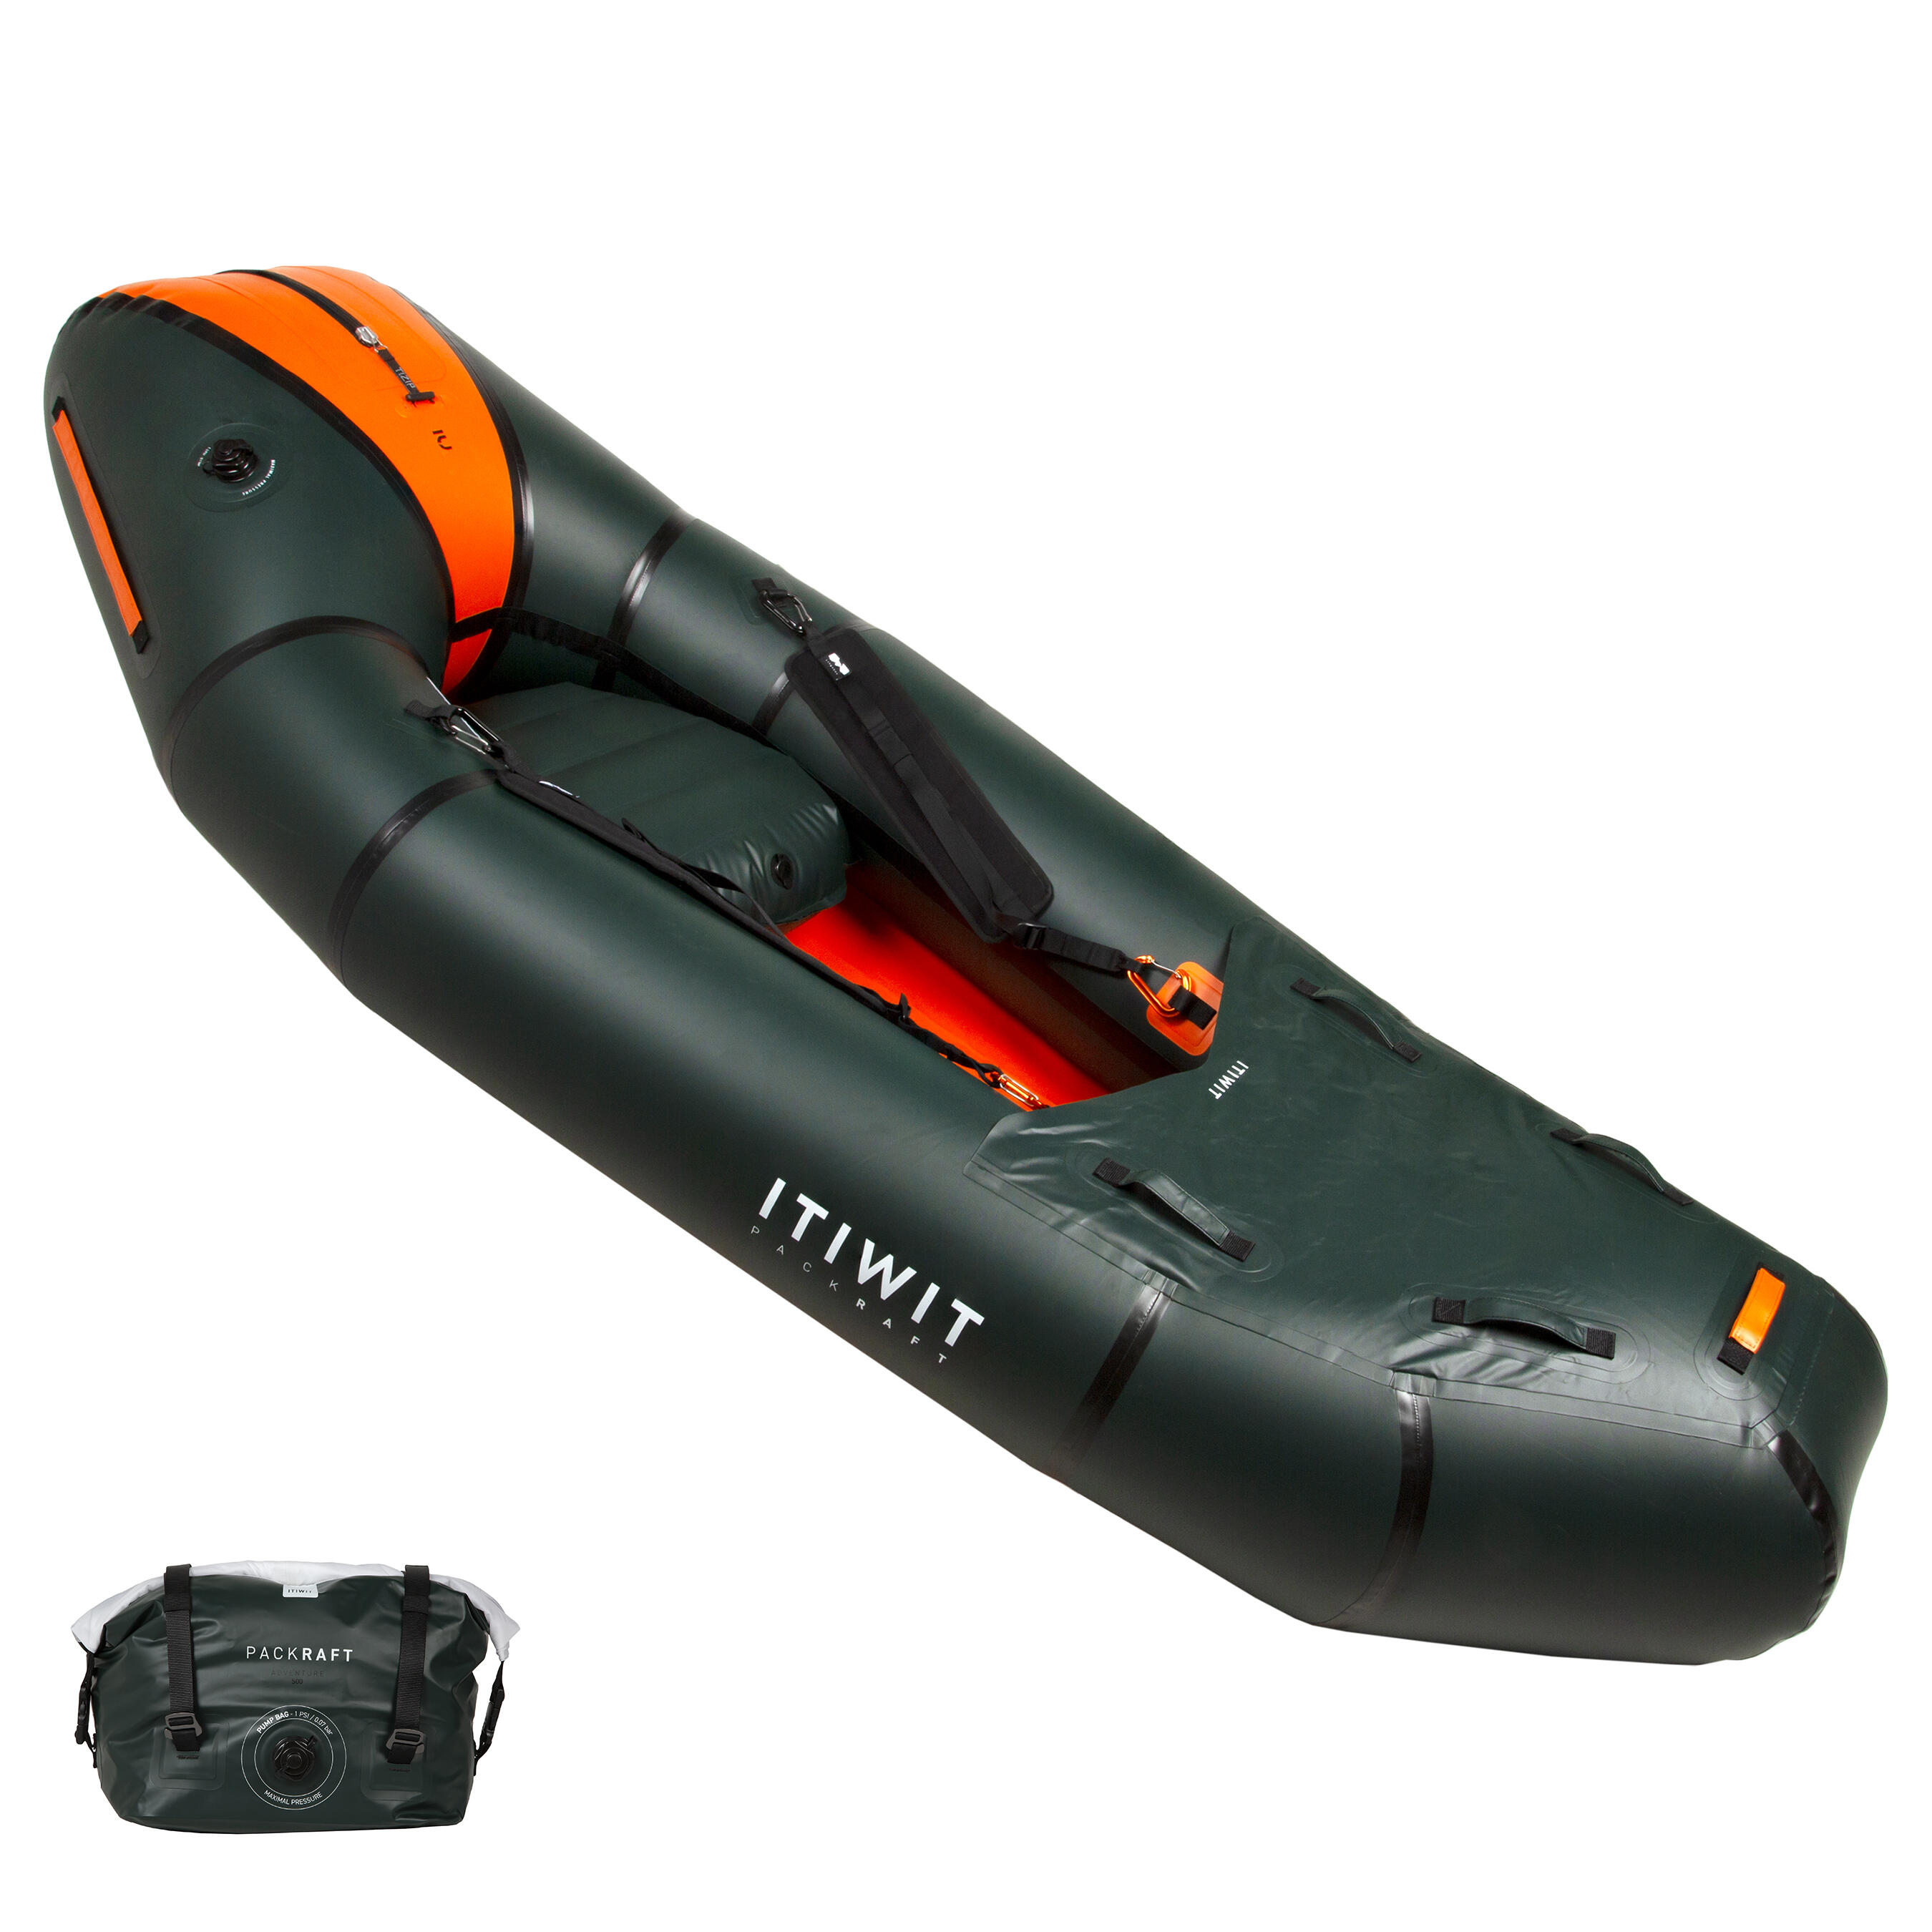 Packraft 500 Kayak Gonflable Tpu Riviere 1 Place Avec Zip Etanche - ITIWIT